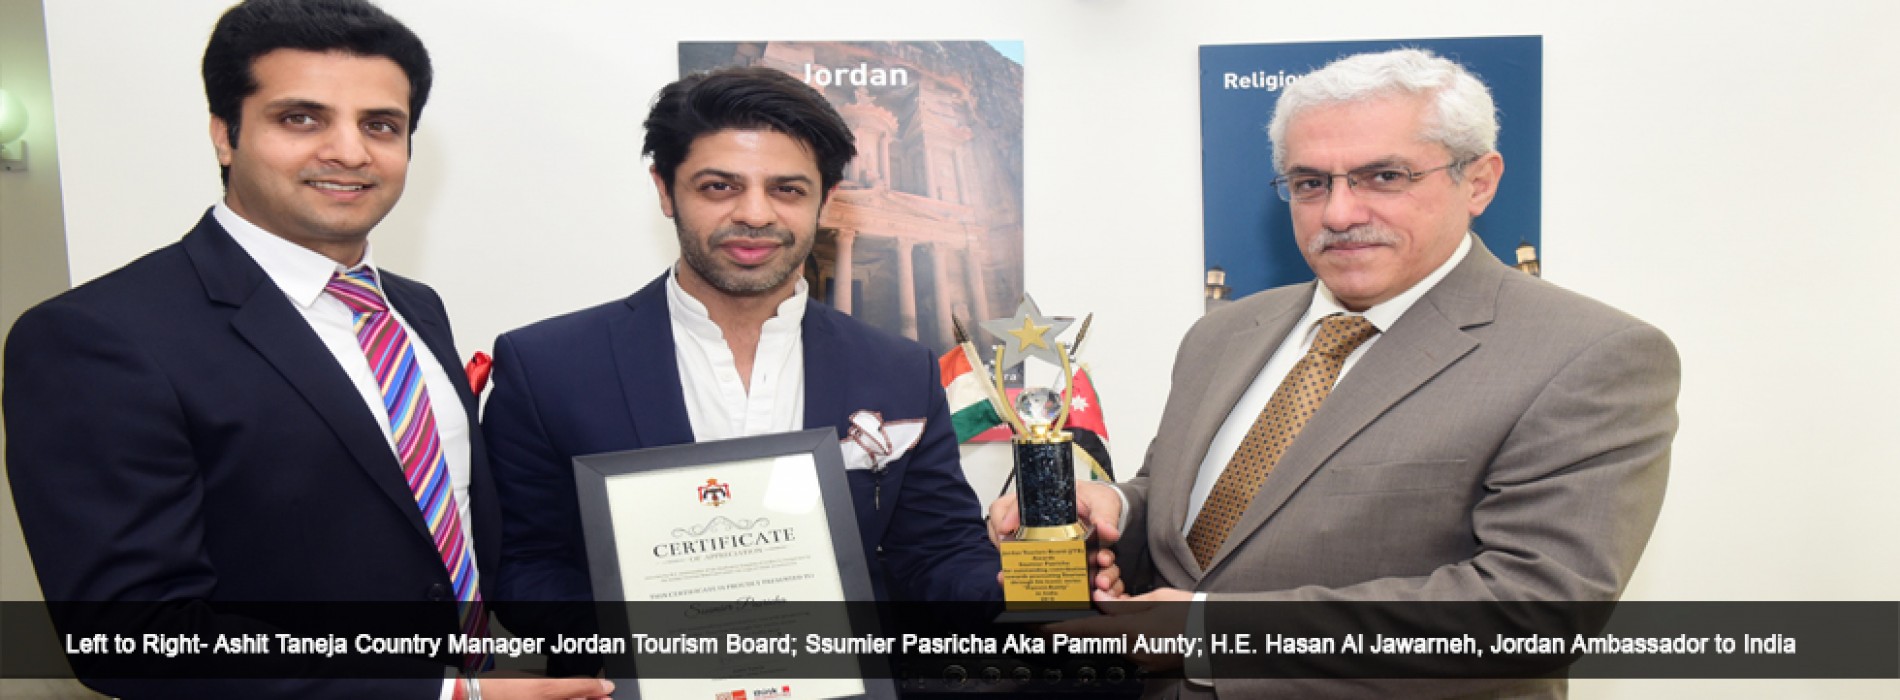 Jordan Tourism Board awards Certificate of Appreciation to Pammi Aunty